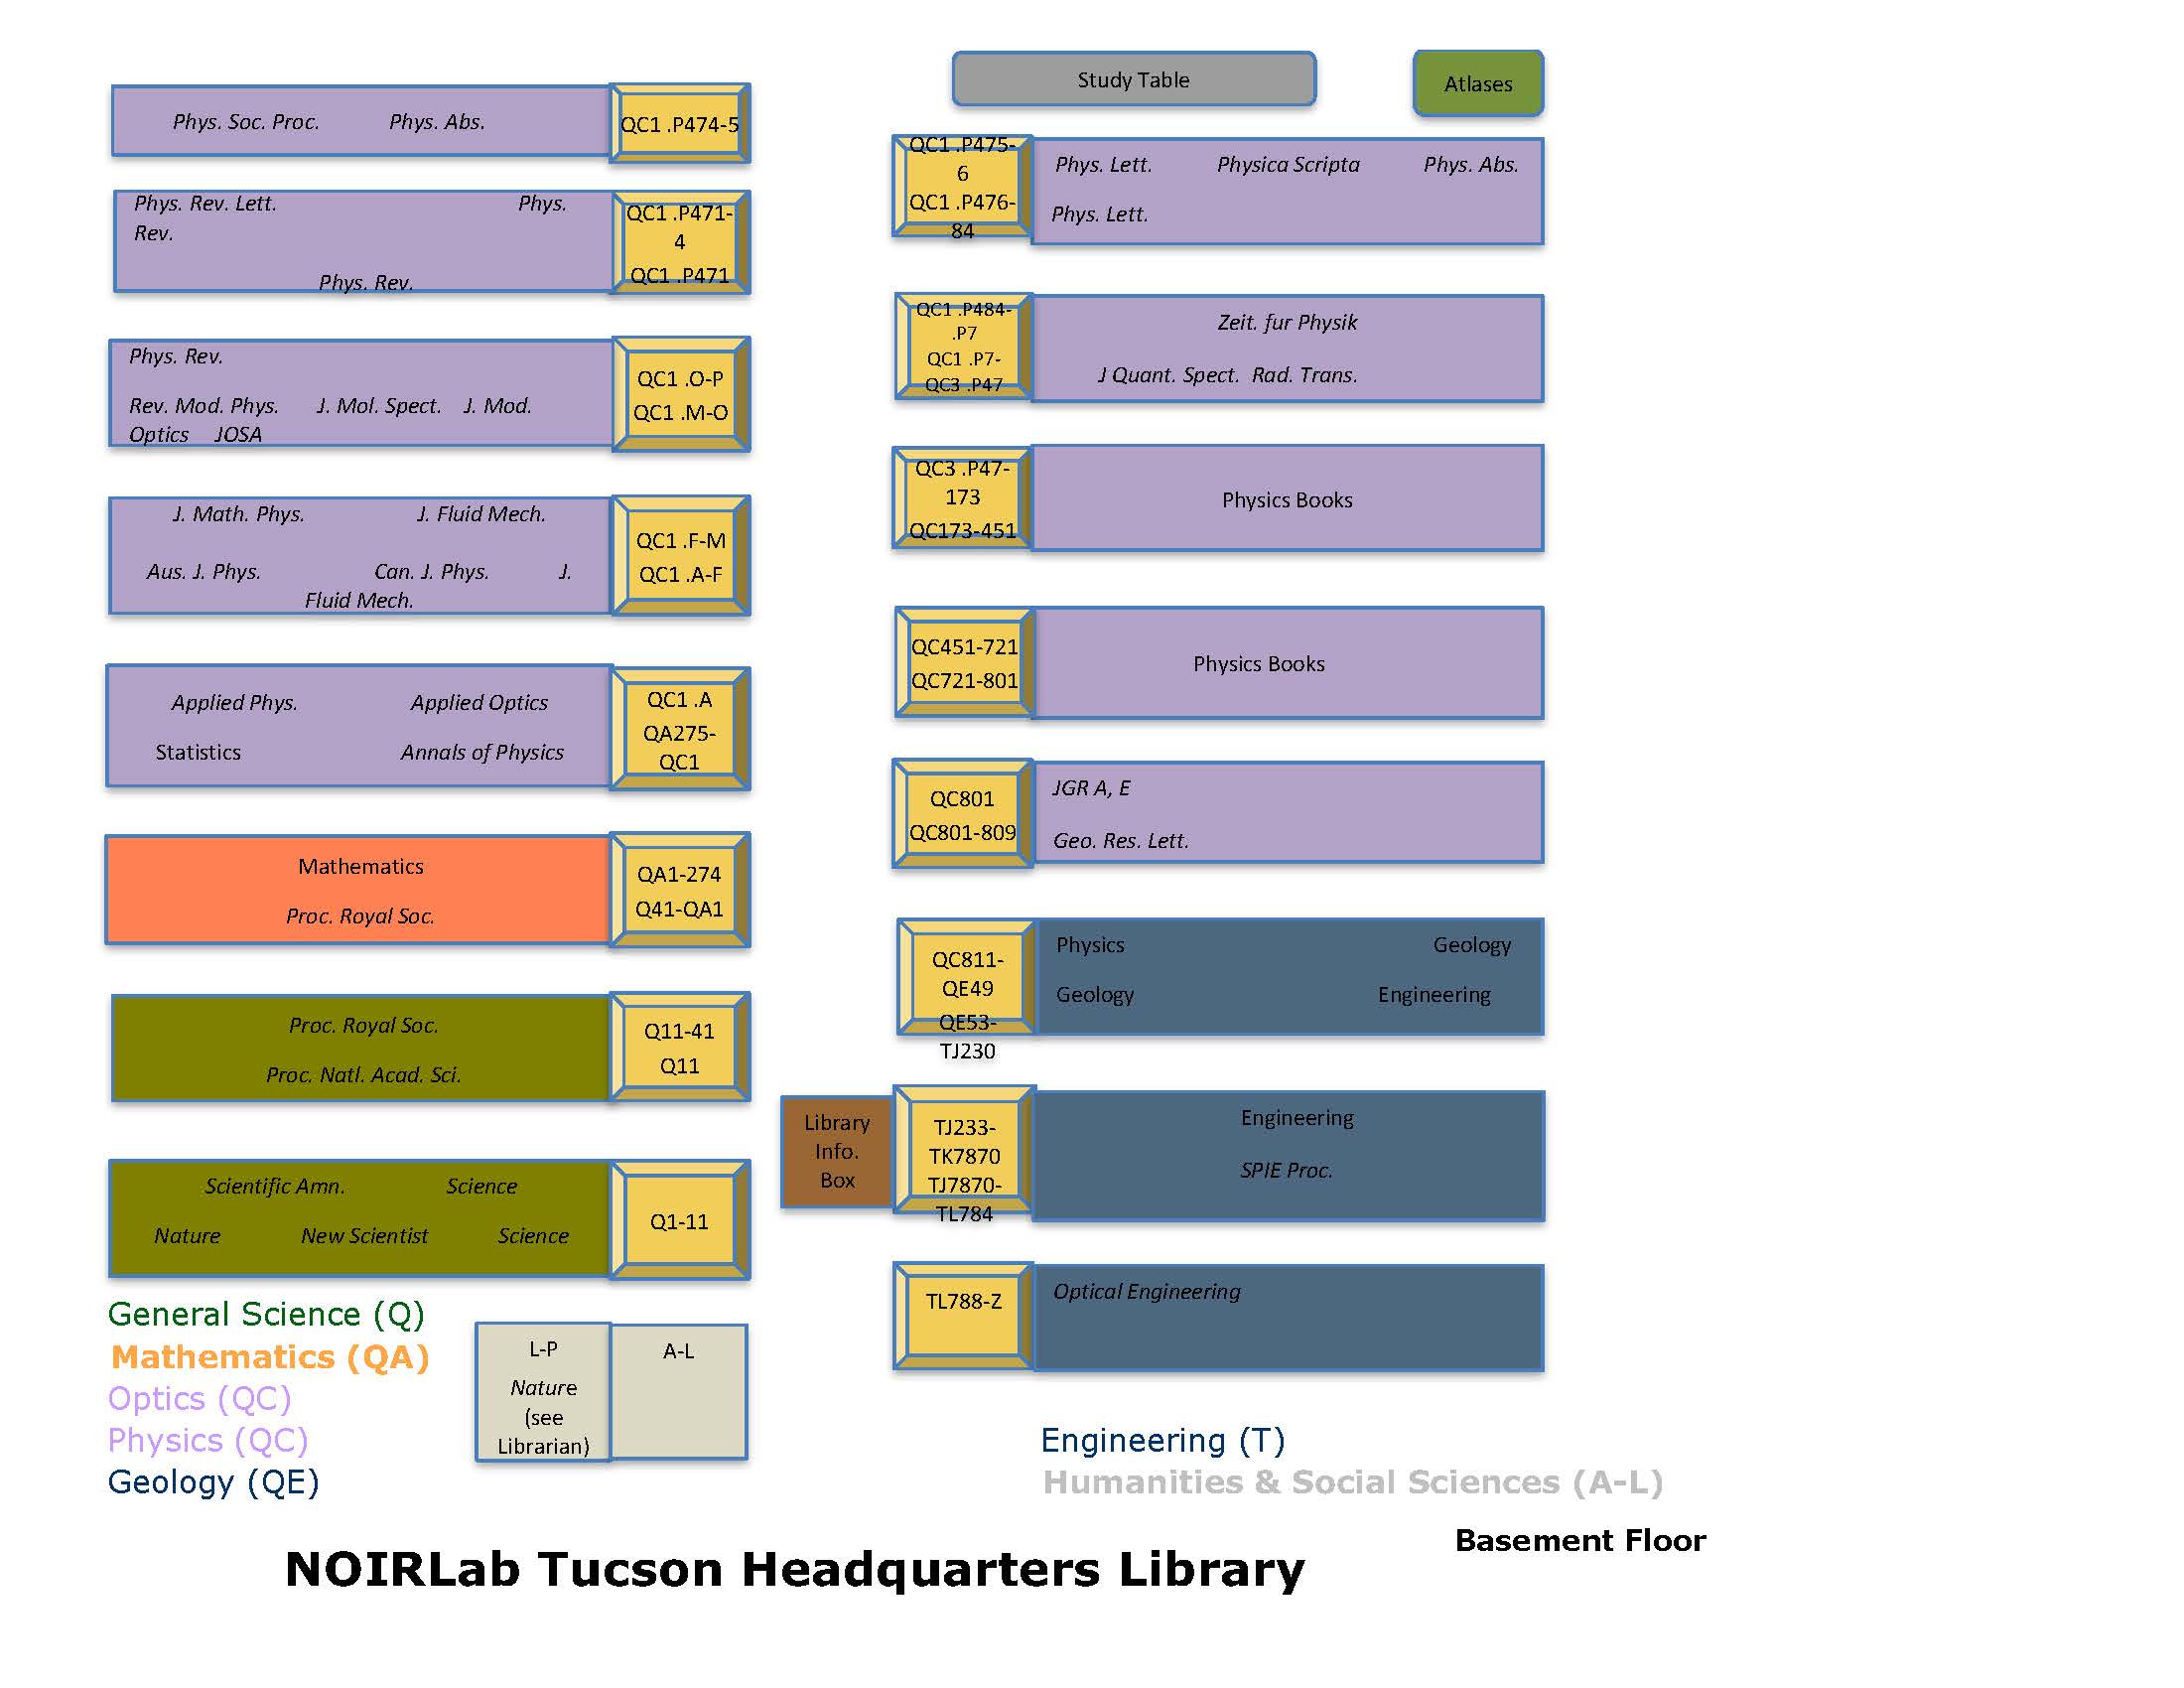 Tucson Headquarters Library Map - Basement Floor